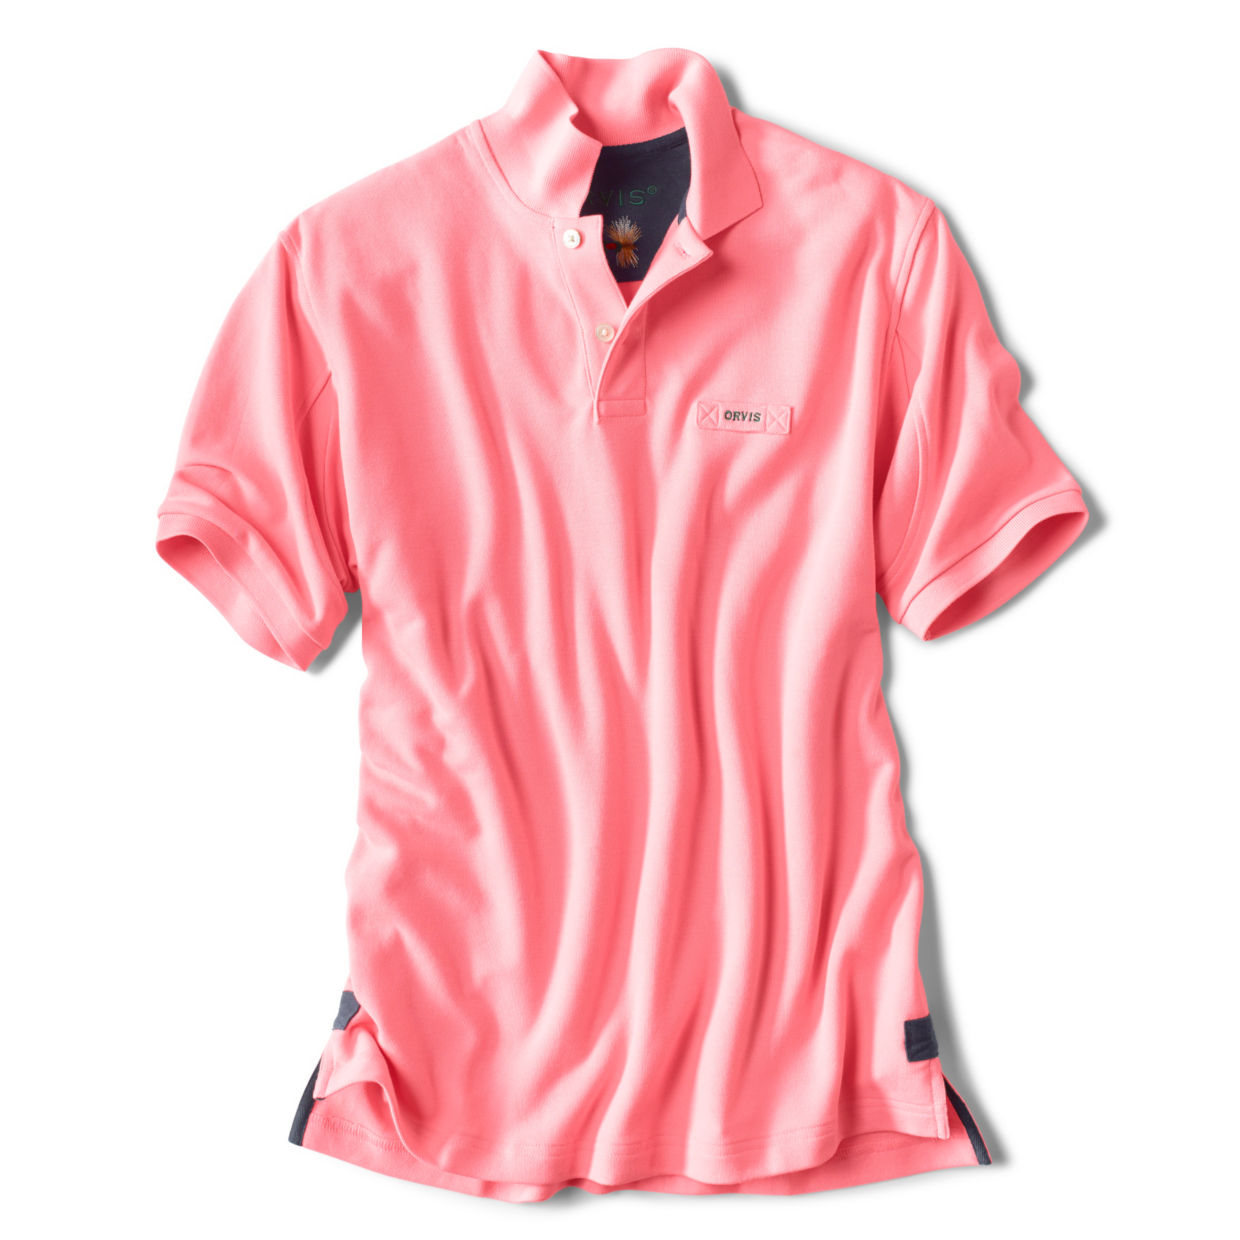 Men's The Orvis Signature Polo Shirt Pink Size Medium